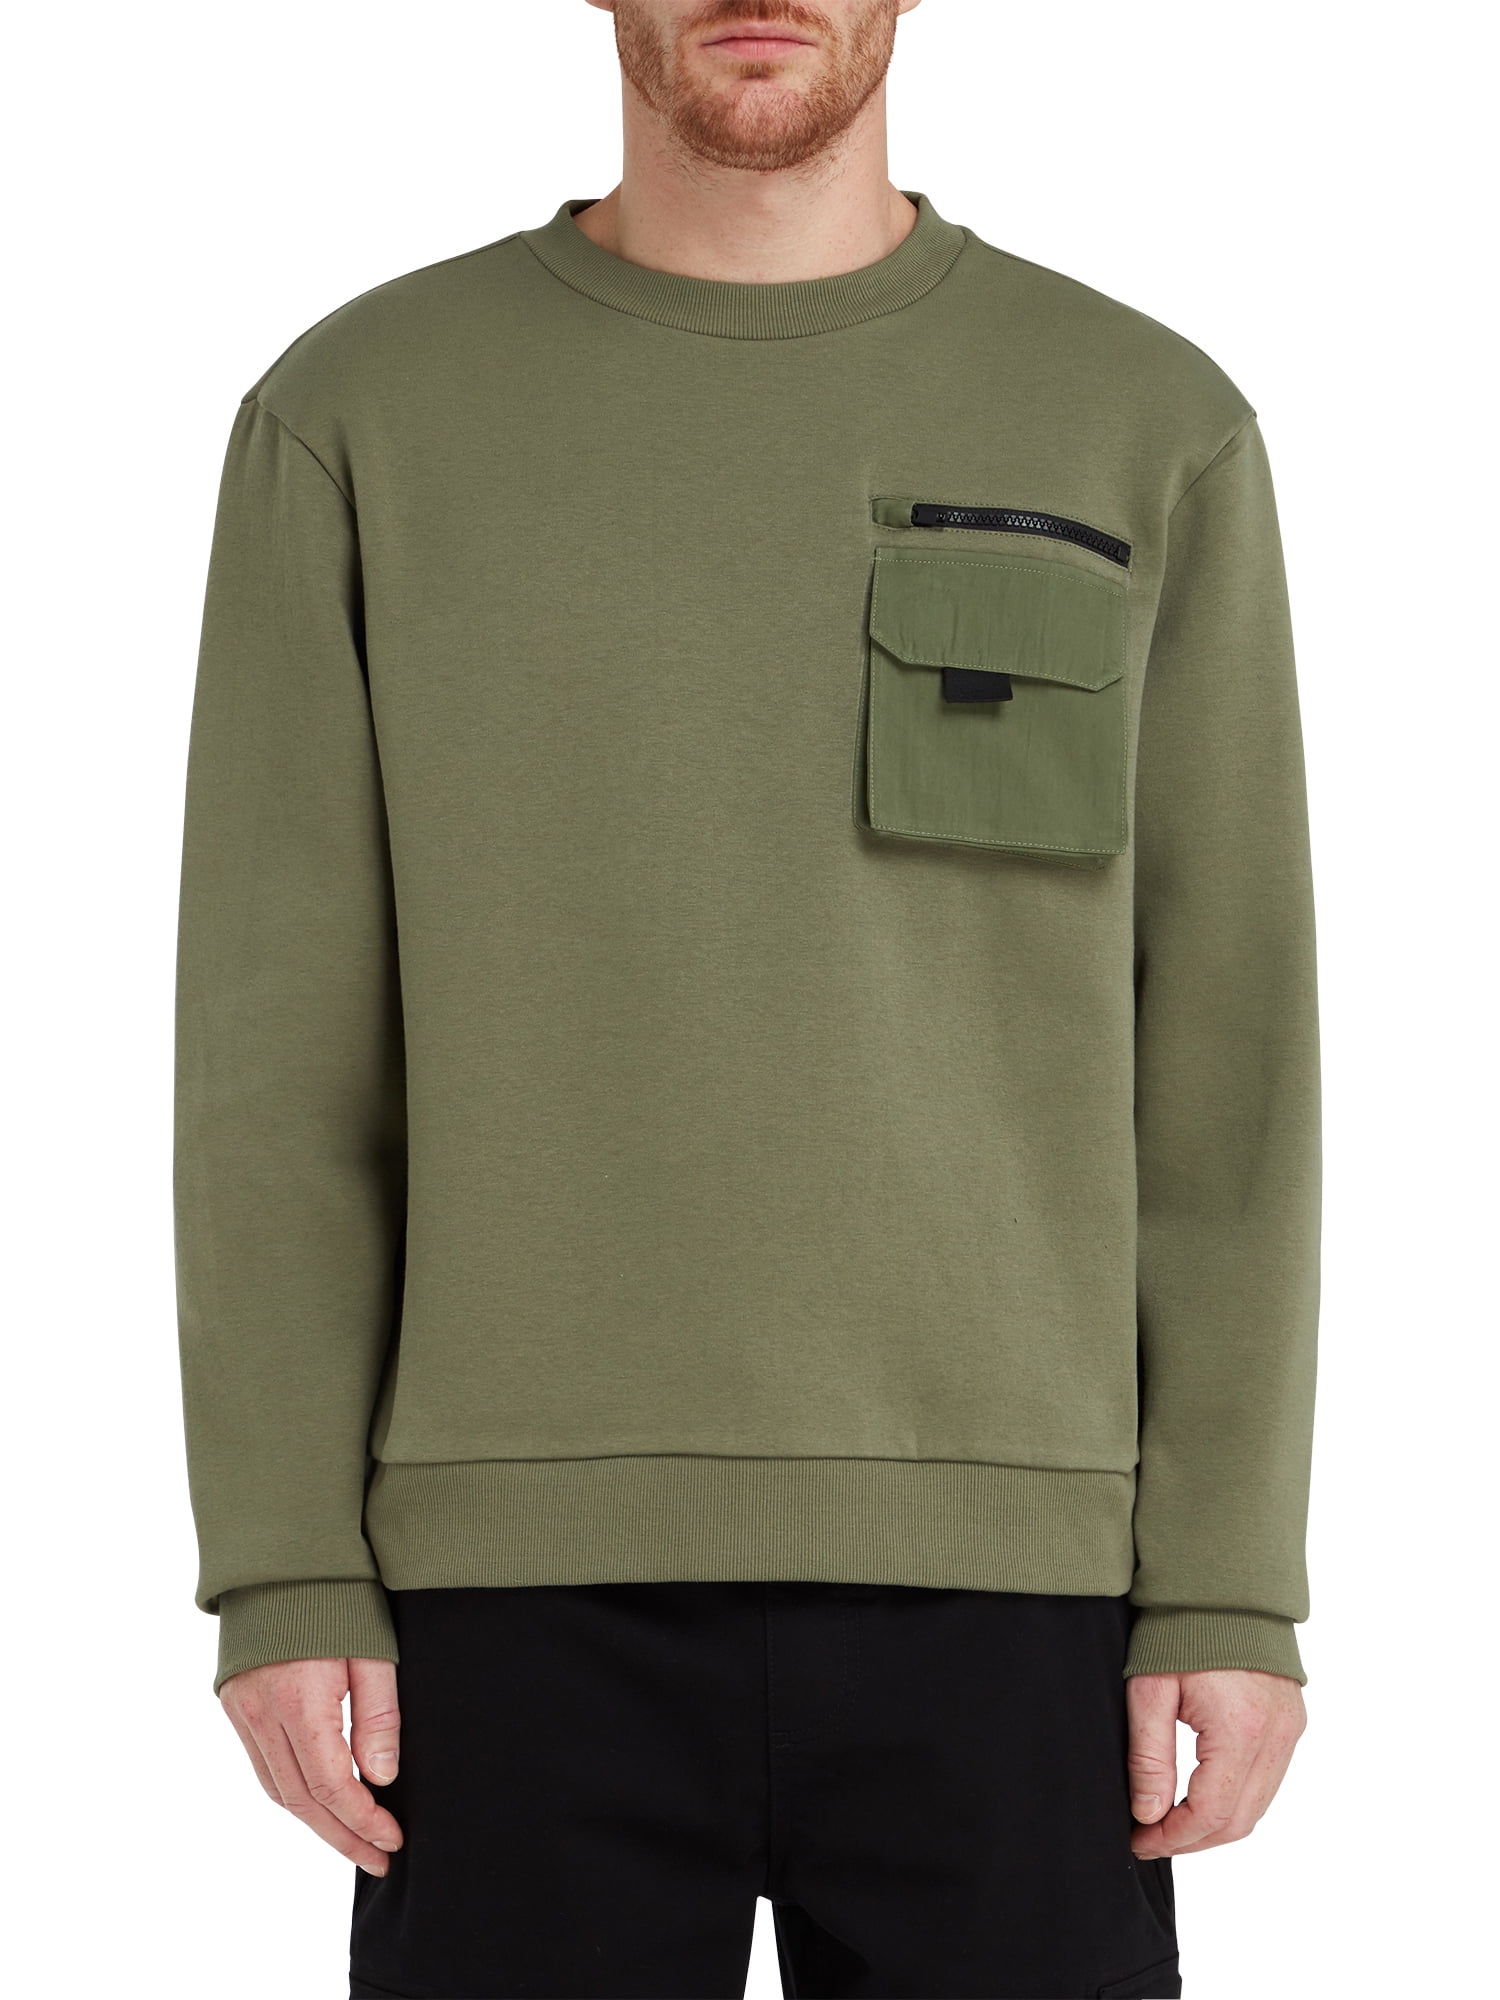 Human Cannabis Leaf Athletic Sweatshirt with Pocket Oversized Sweaters